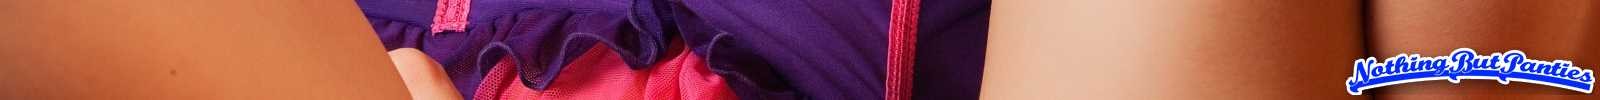 Lacey bragas de encaje púrpura tanga
 #72632744